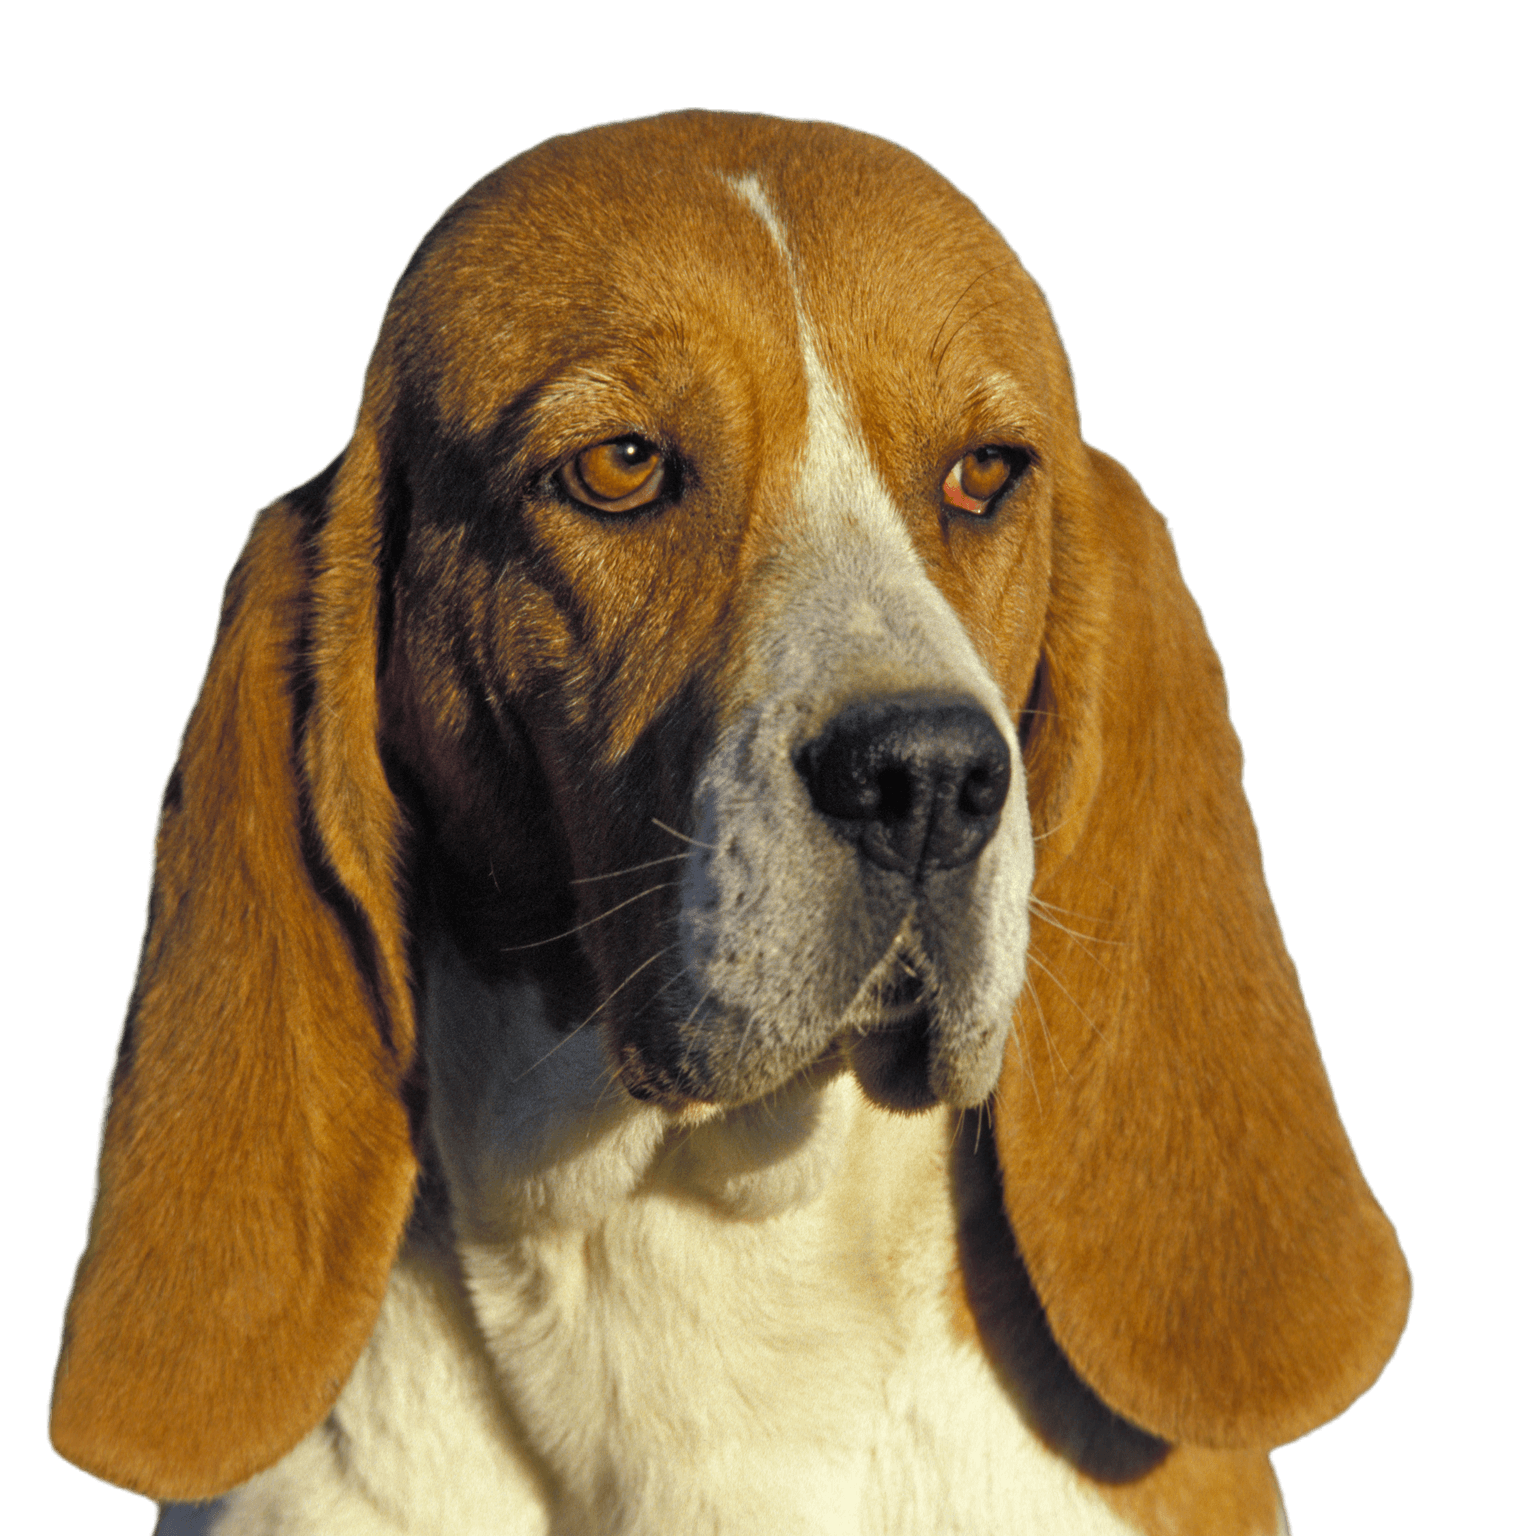 Artois Hound, portrait of a dog